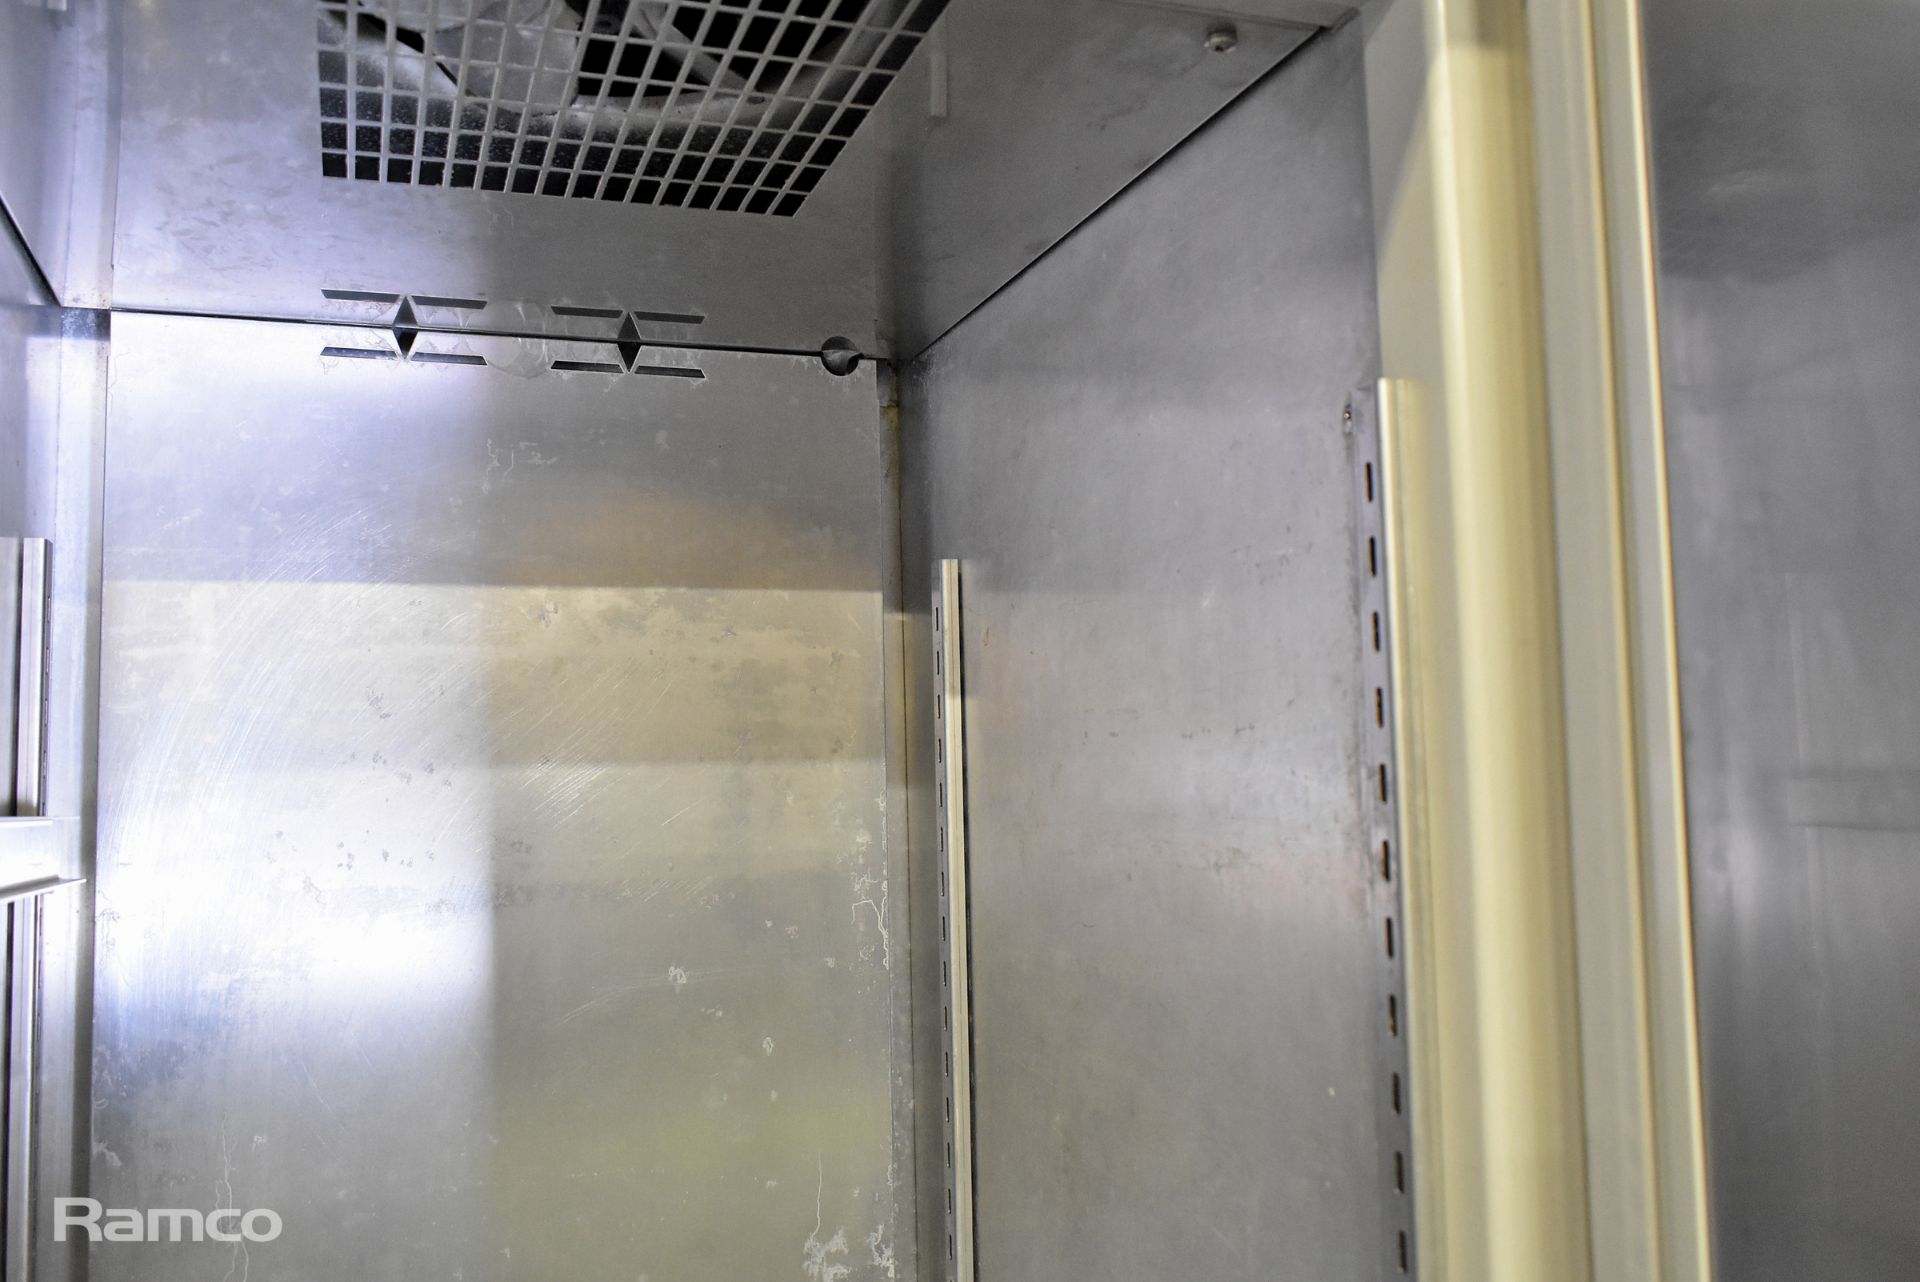 Gram Midi 425 stainless steel single door upright fridge - 600mm W - Image 3 of 4